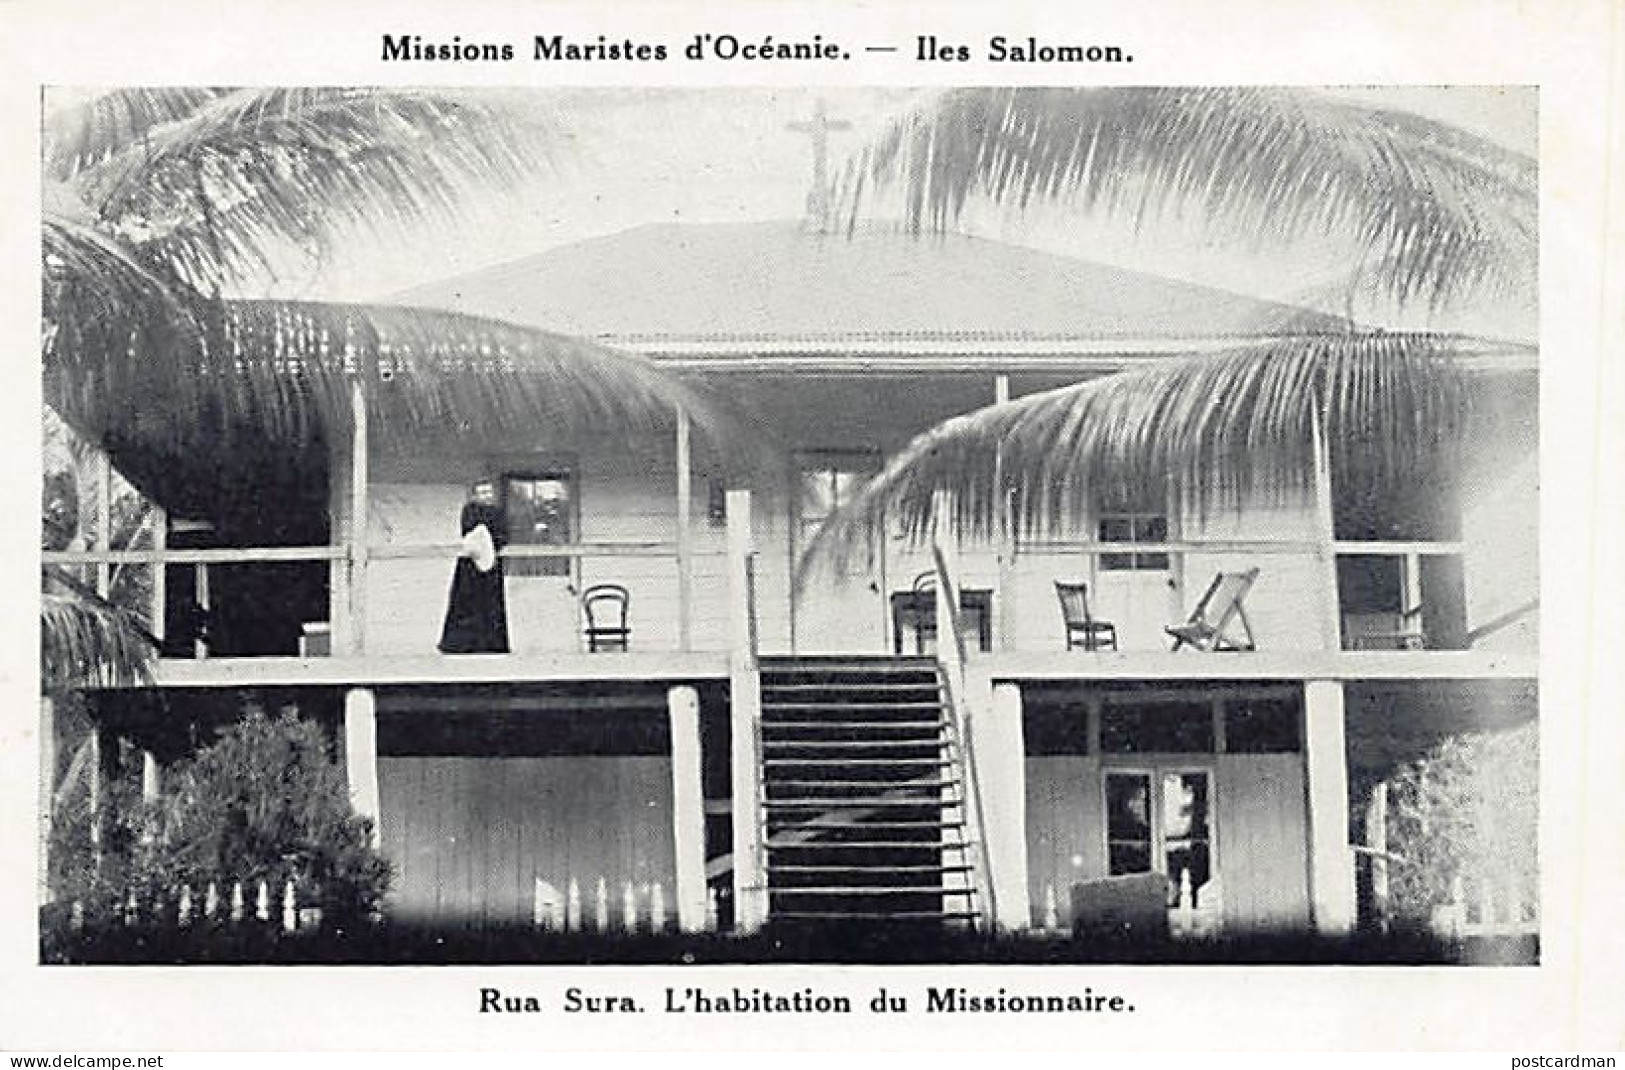 Solomon Islands - Rua Sura Island (off Aola Bay, Guadalcanal) - The Missionary's Dwelling - Publ. Missions Maristes D'Oc - Salomon